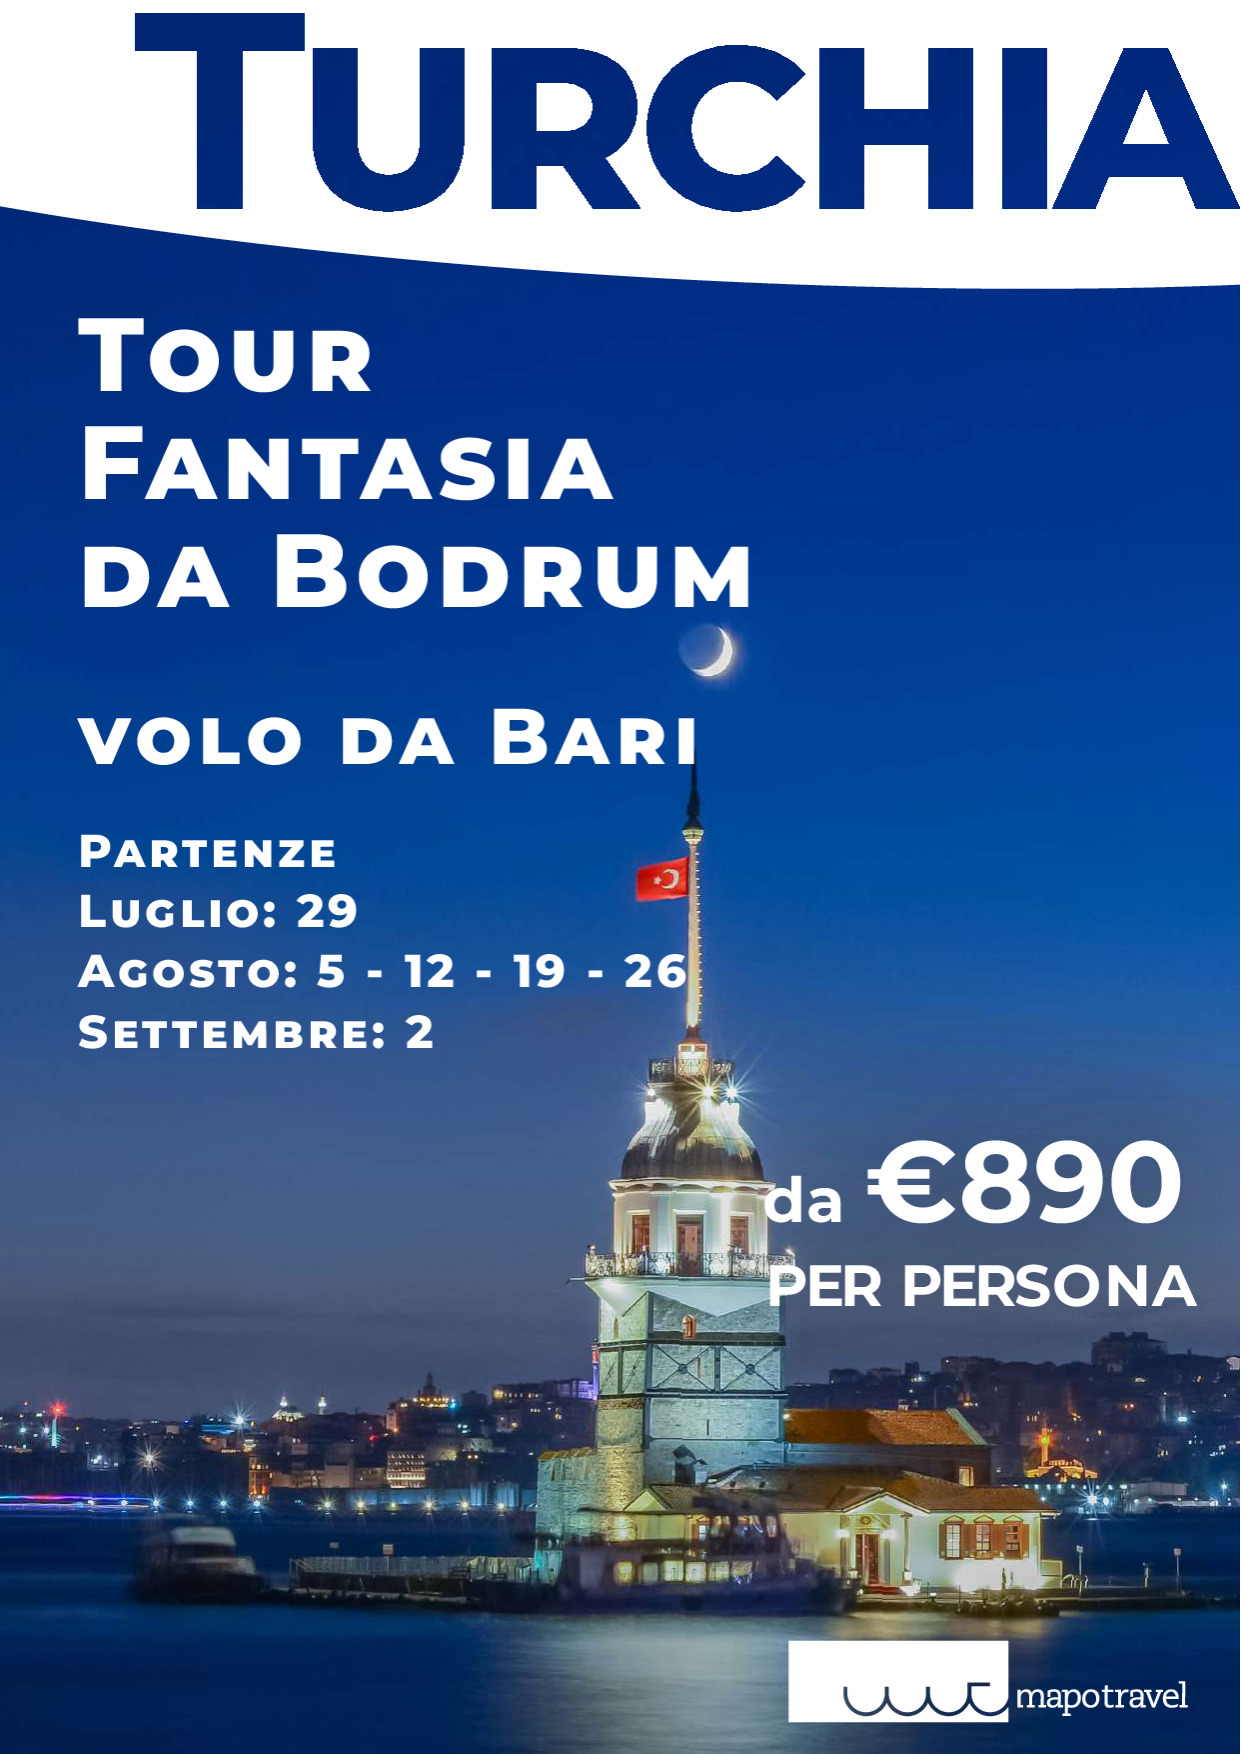 Turchia Tour Fantasia da Bodrum Volo da Bari